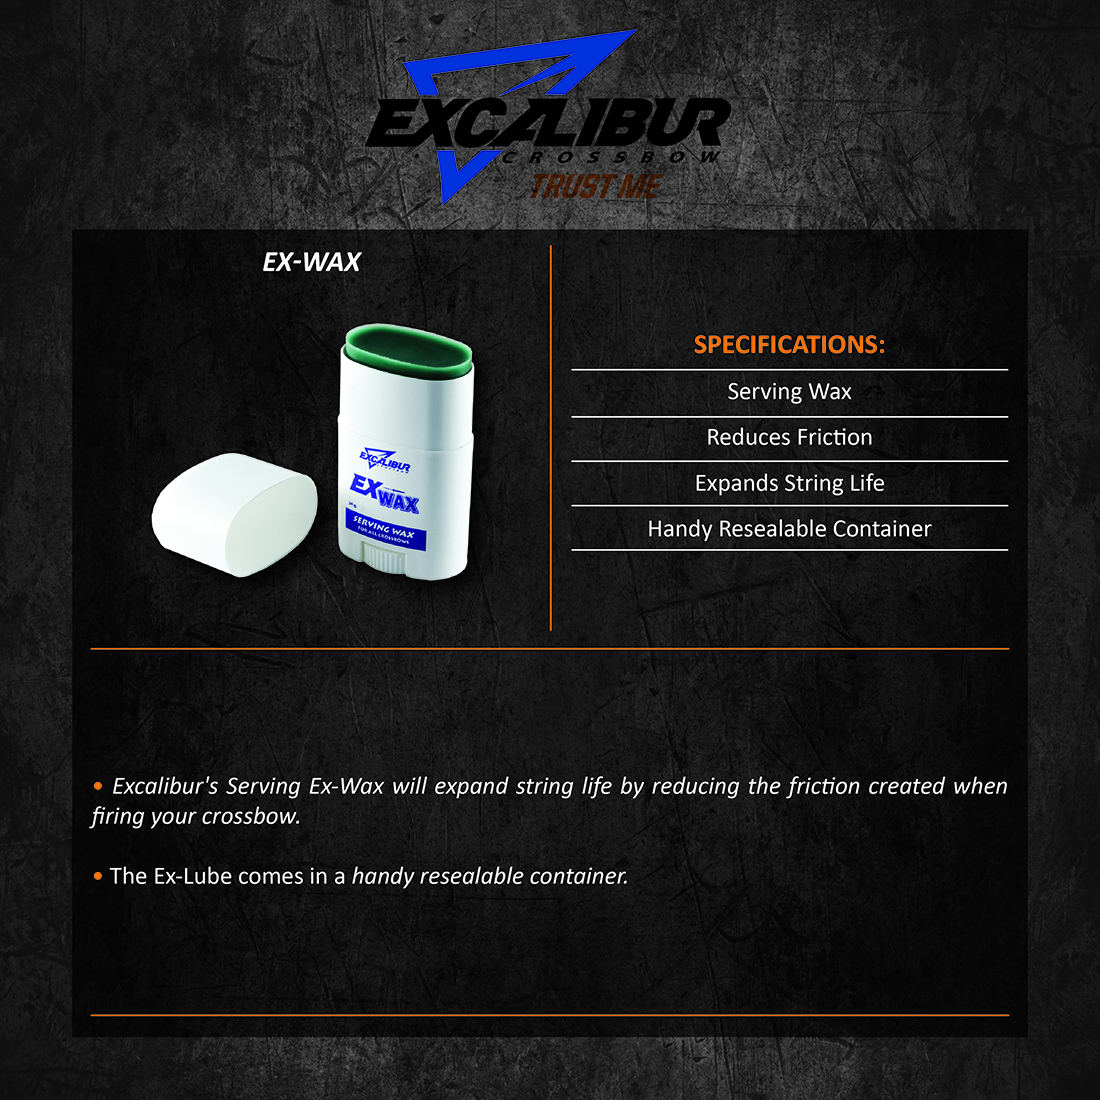 Excalibur_Ex_Wax_Product_Description